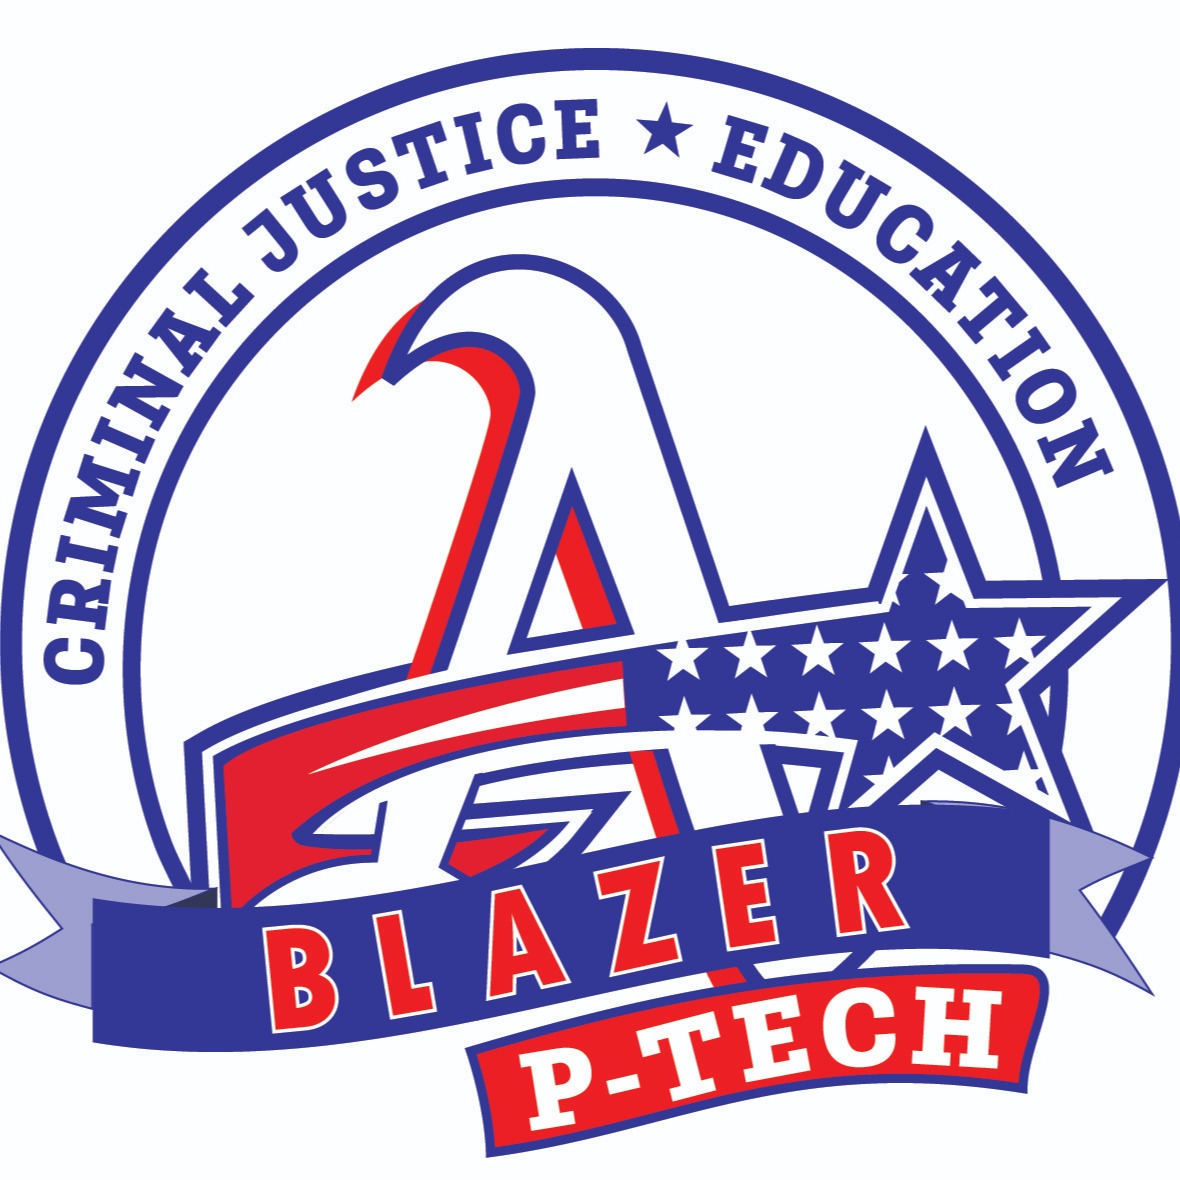 Americas High School Blazers P-TECH logo